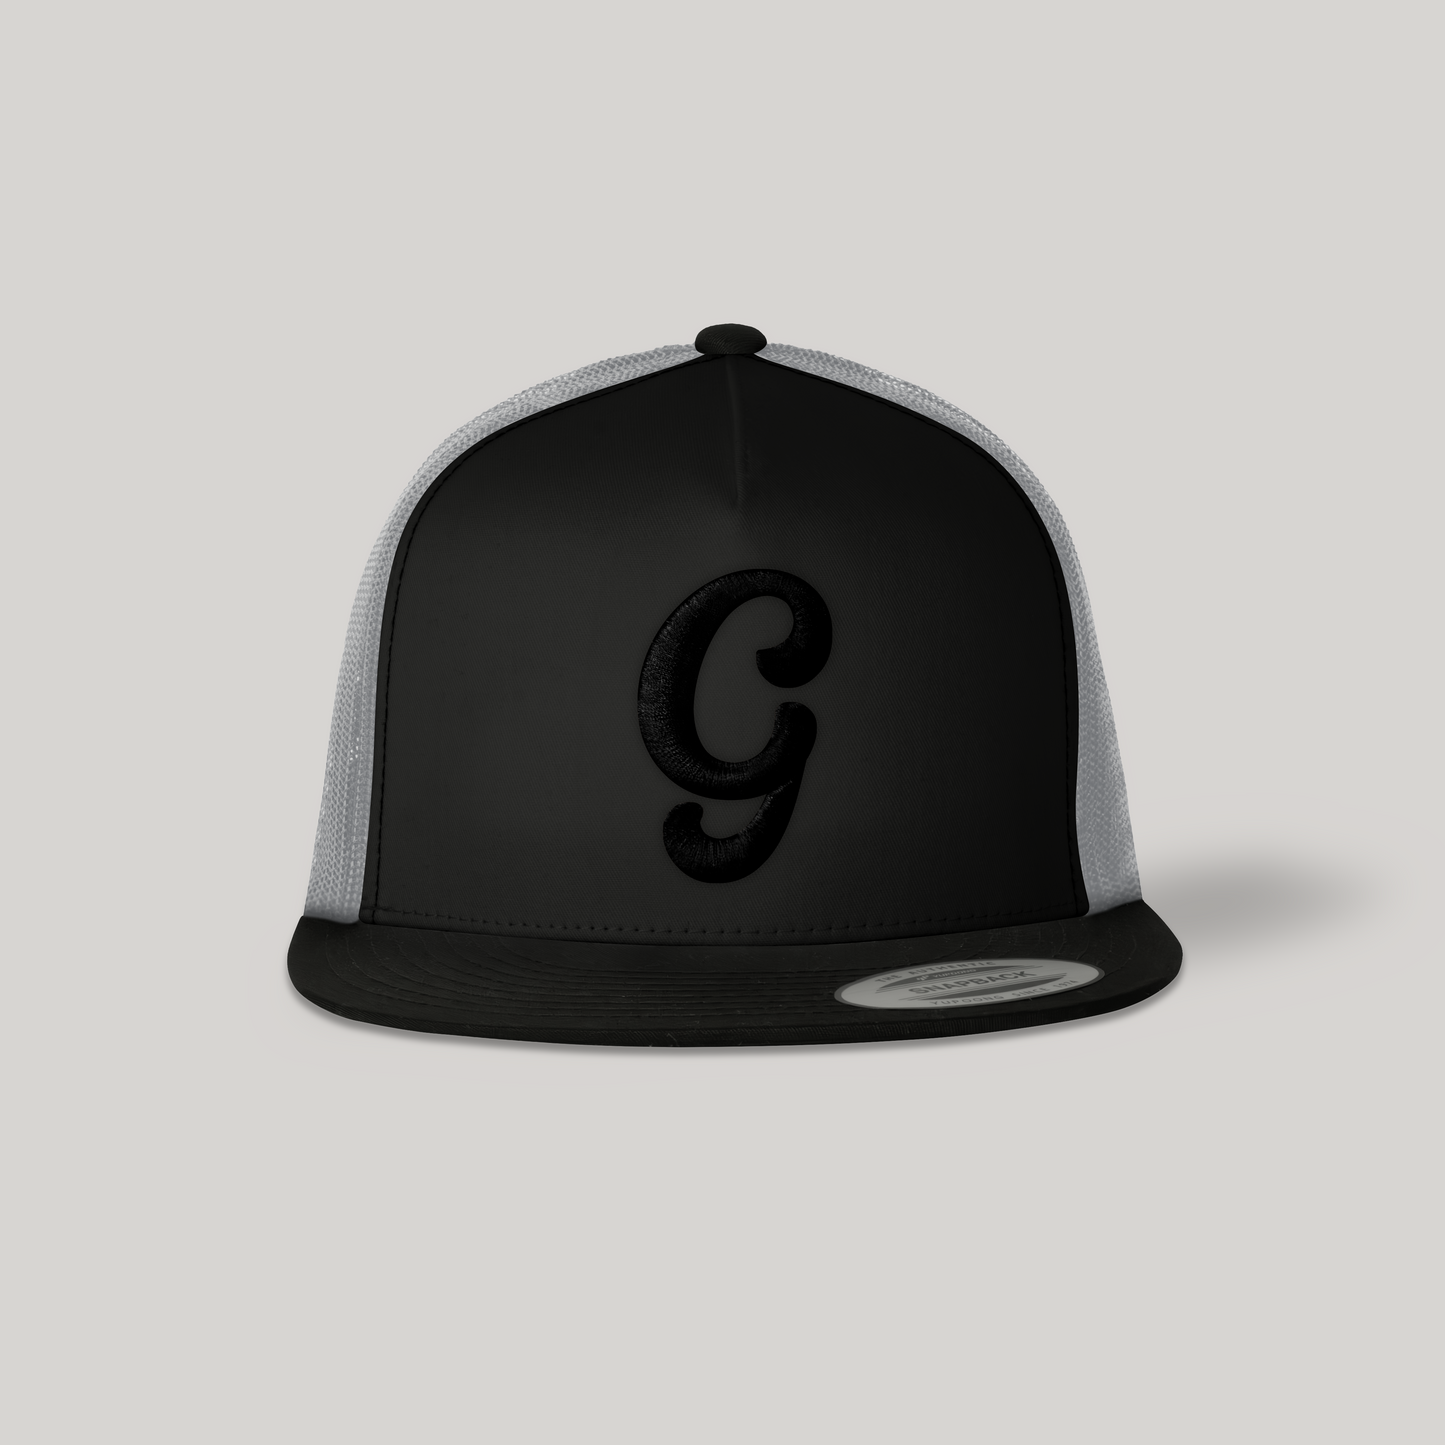 Classic Black/White G Hat